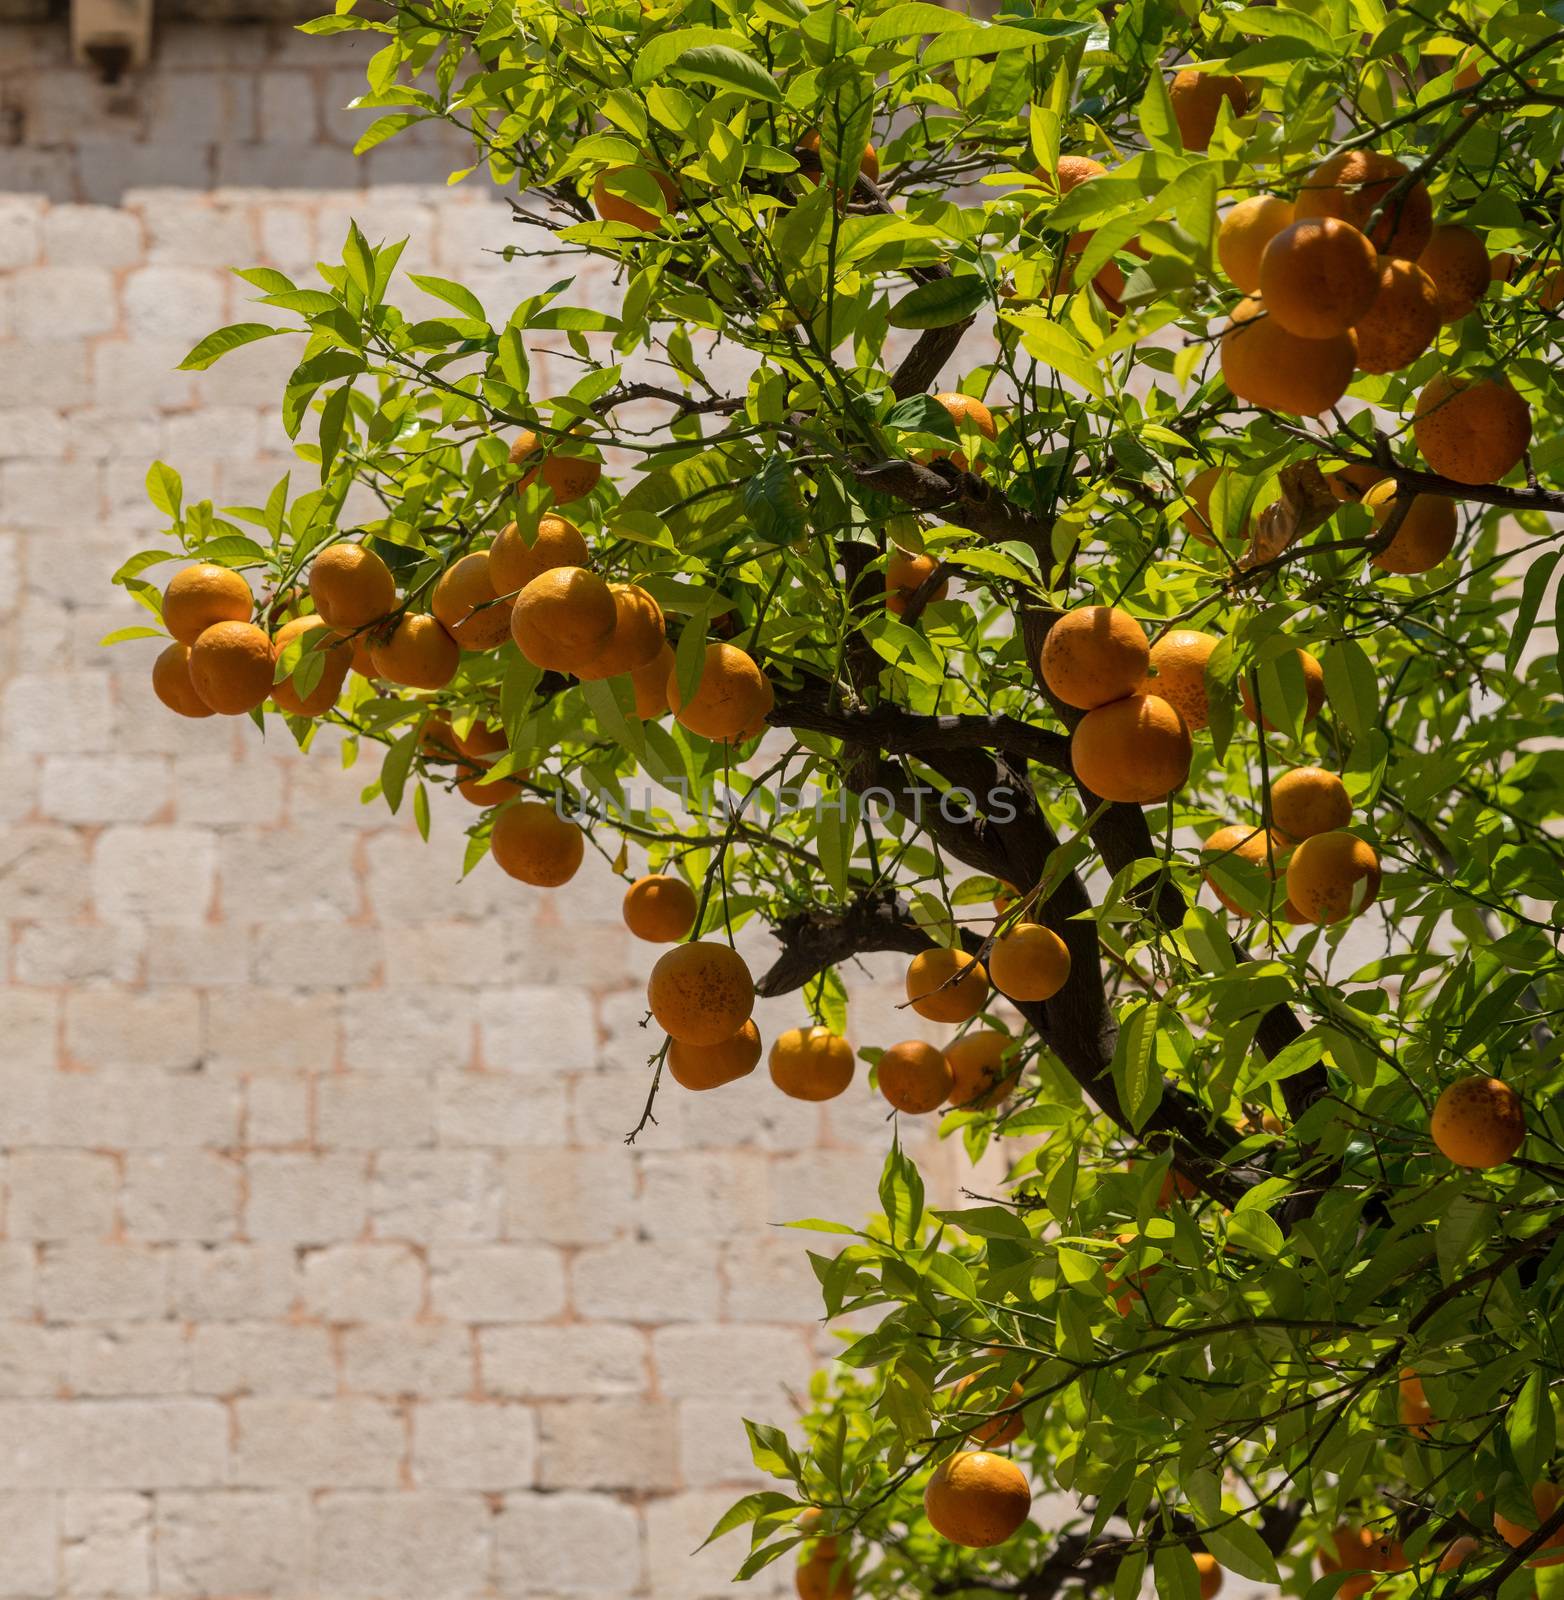 Oranges growing in courtyard of monastery by steheap